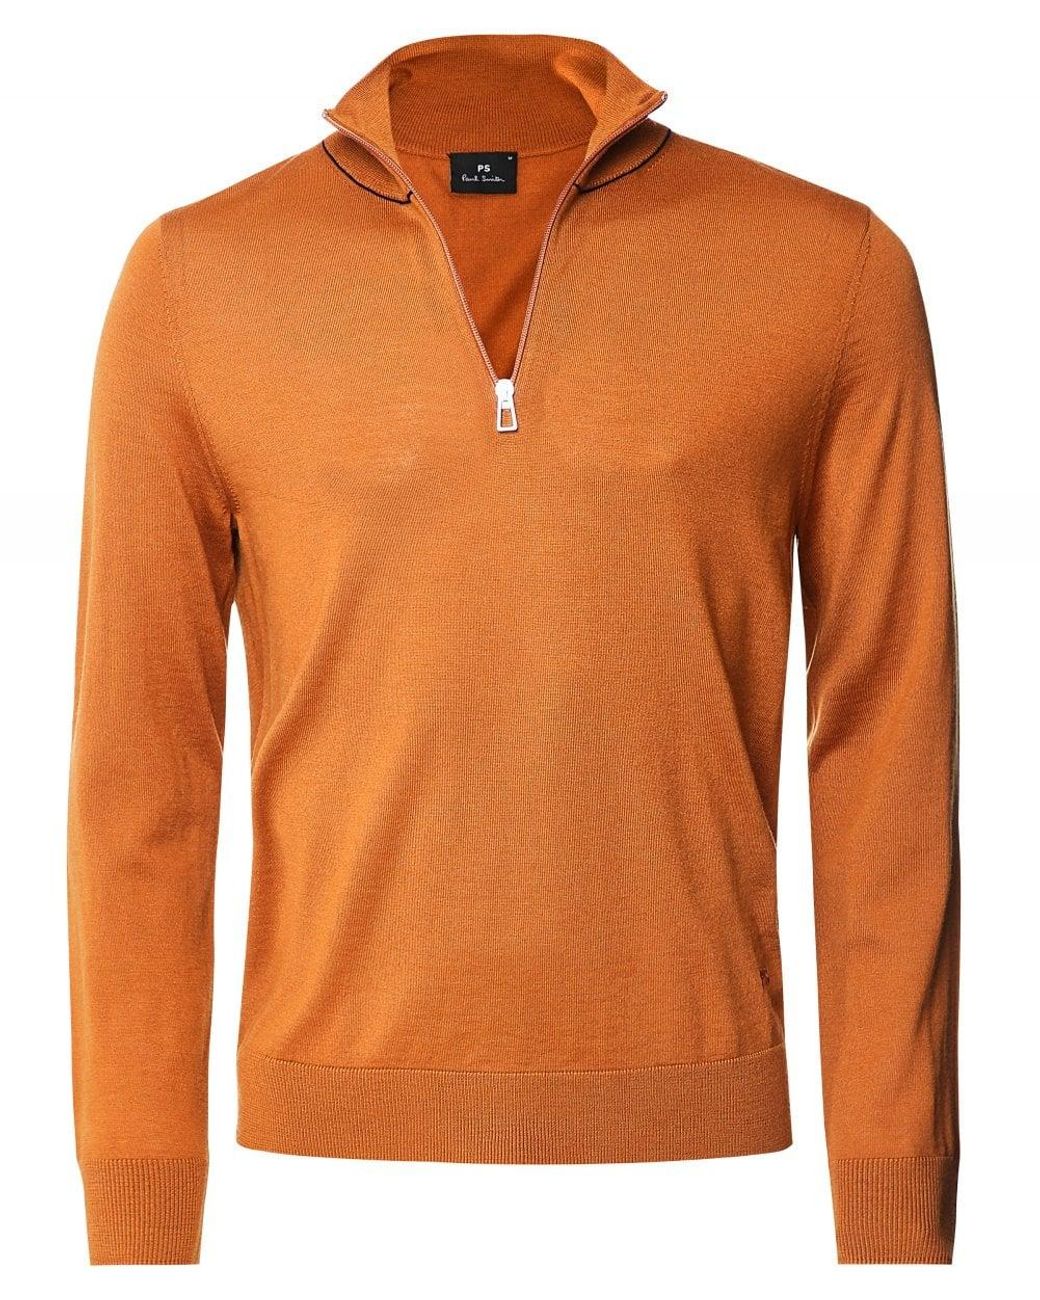 Paul Smith Merino Wool Half-zip Jumper in Orange for Men - Lyst